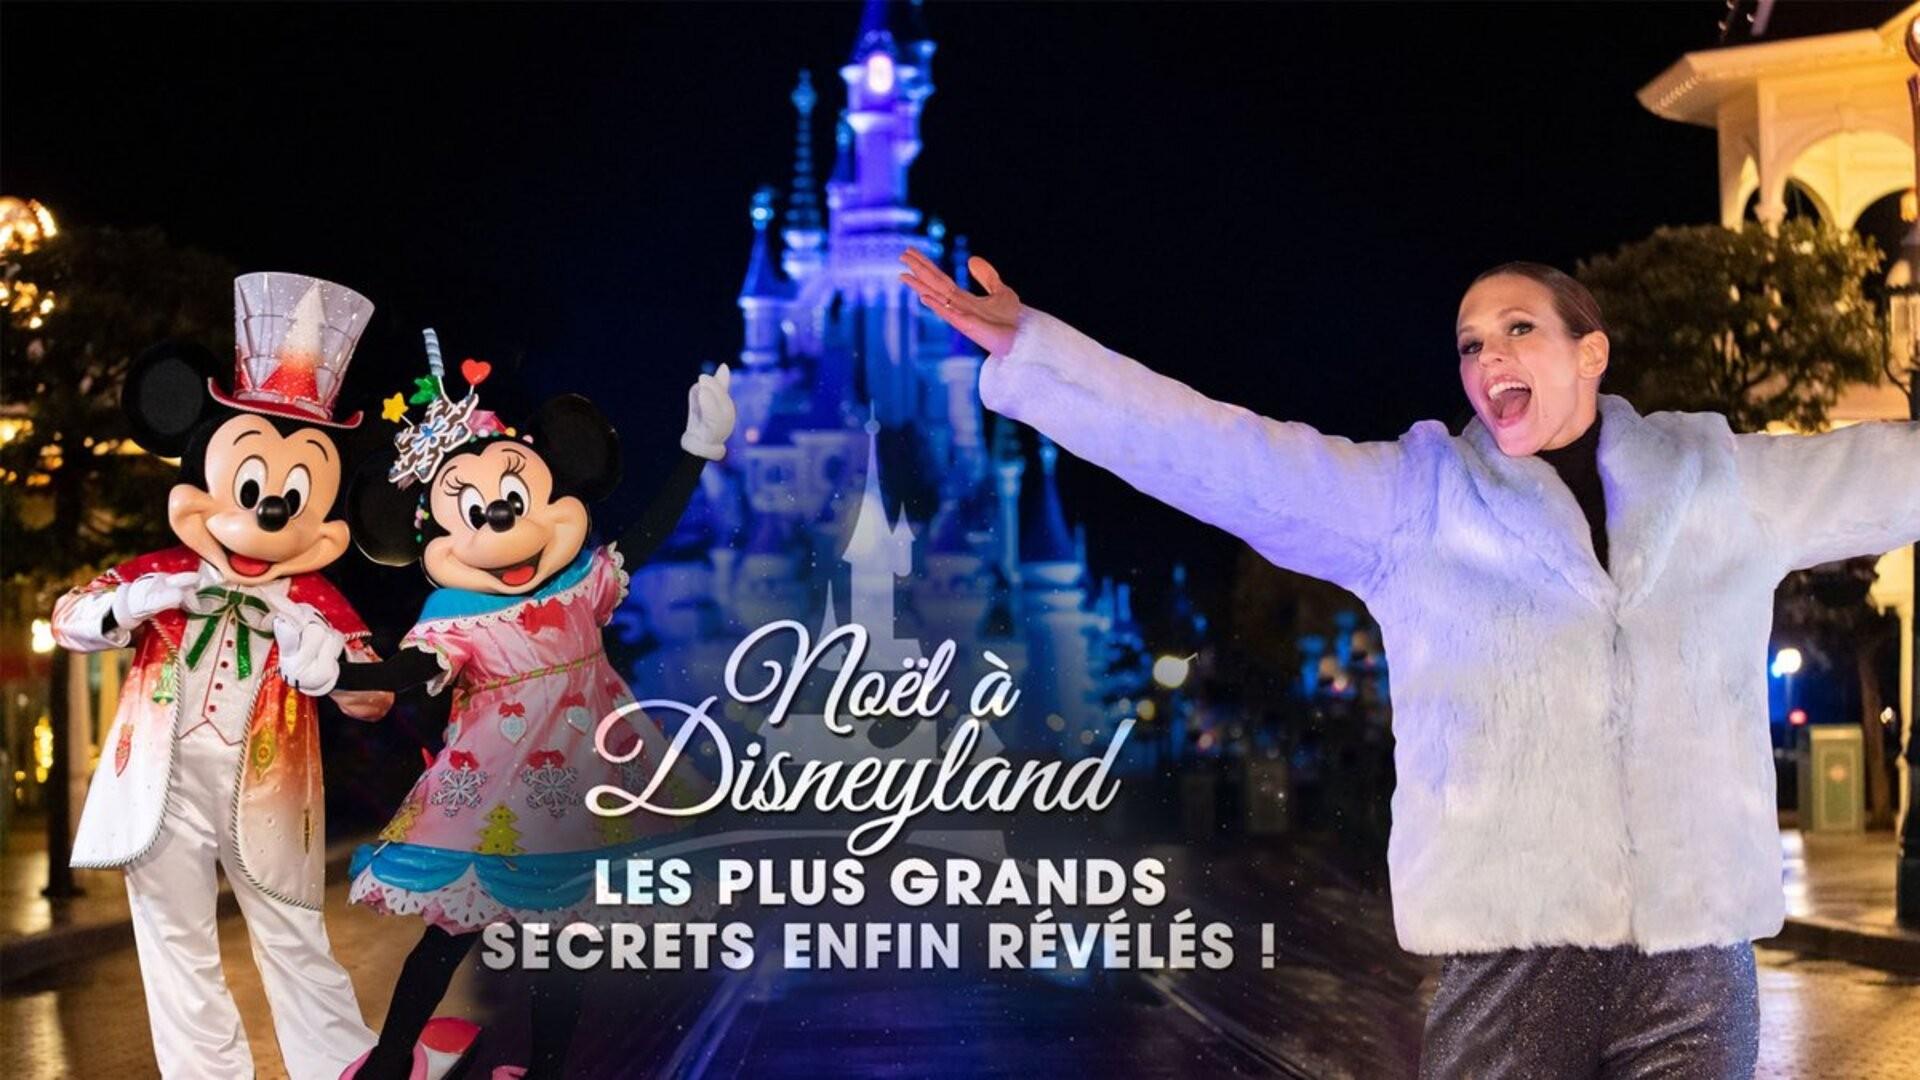 The Magic of Christmas at Disneyland - Biggest Secrets Finally Revealed